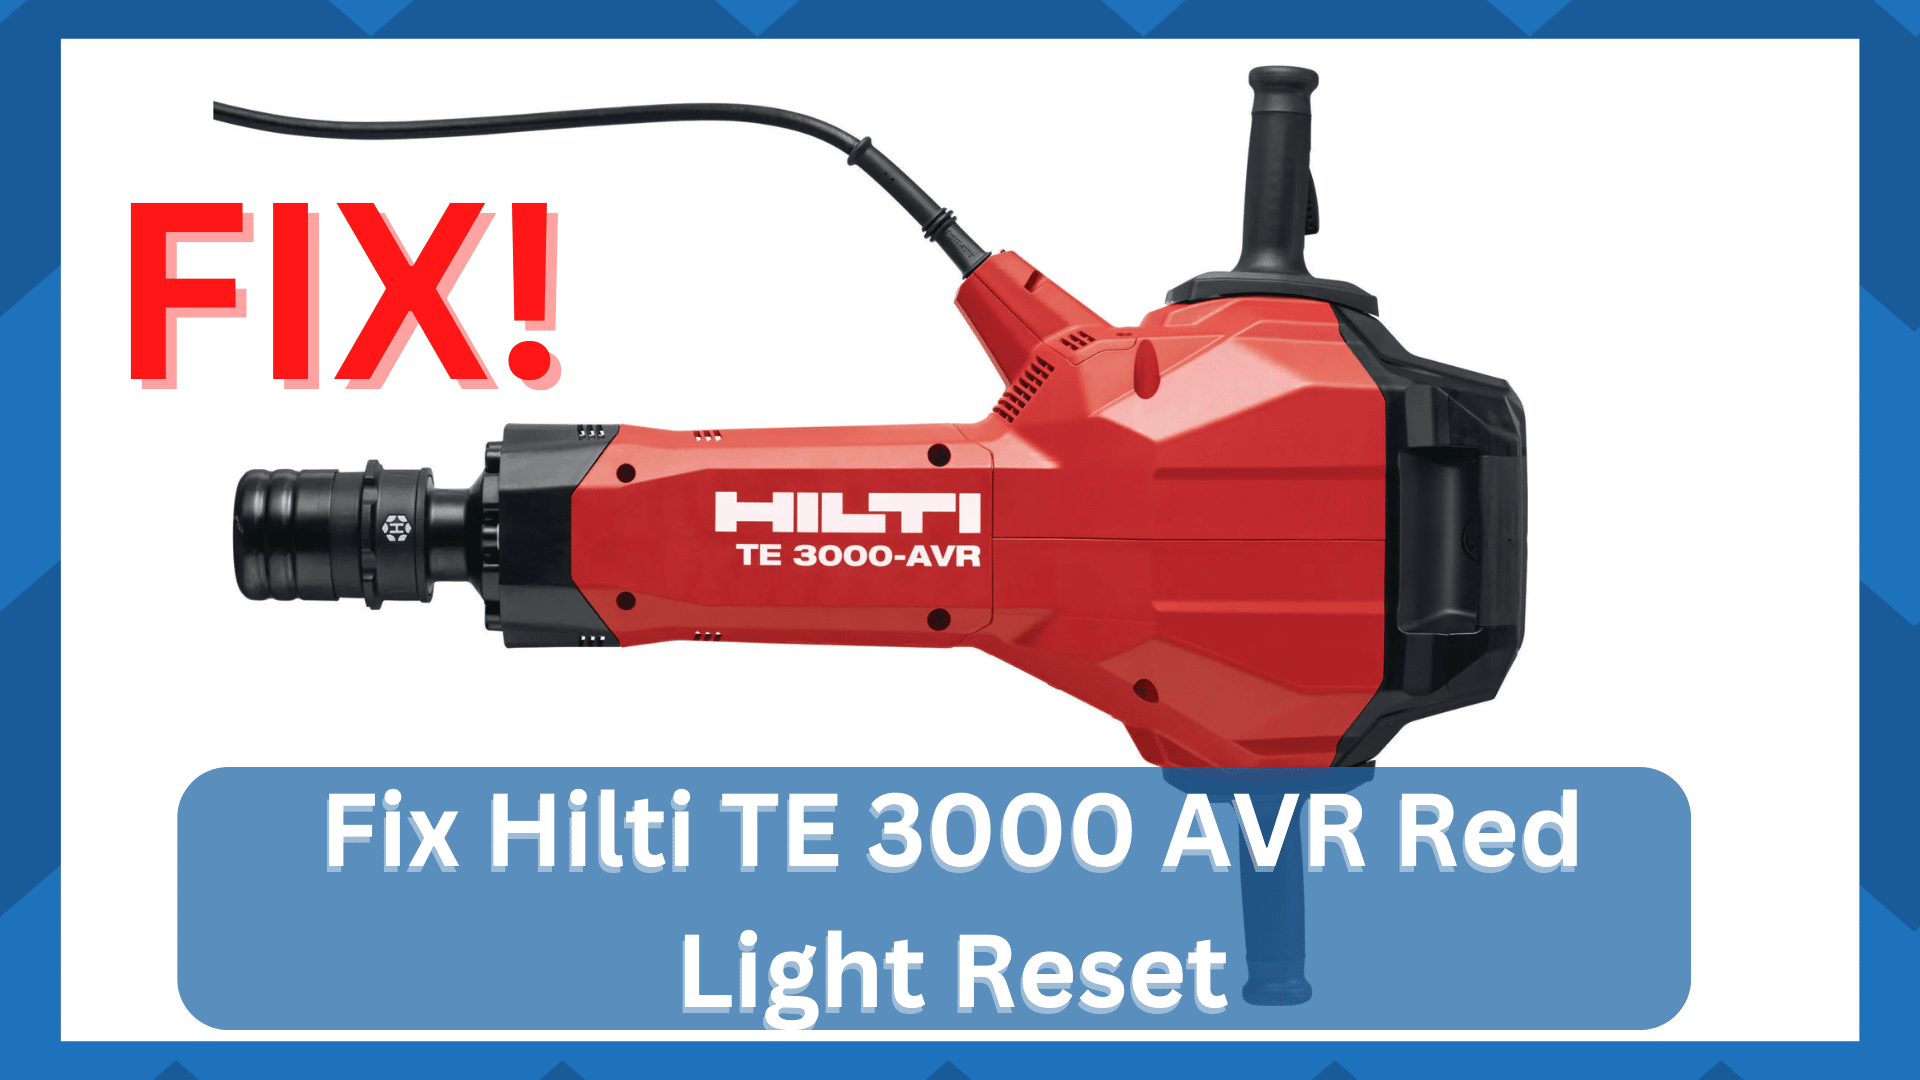 hilti TE 3000 AVR red light reset